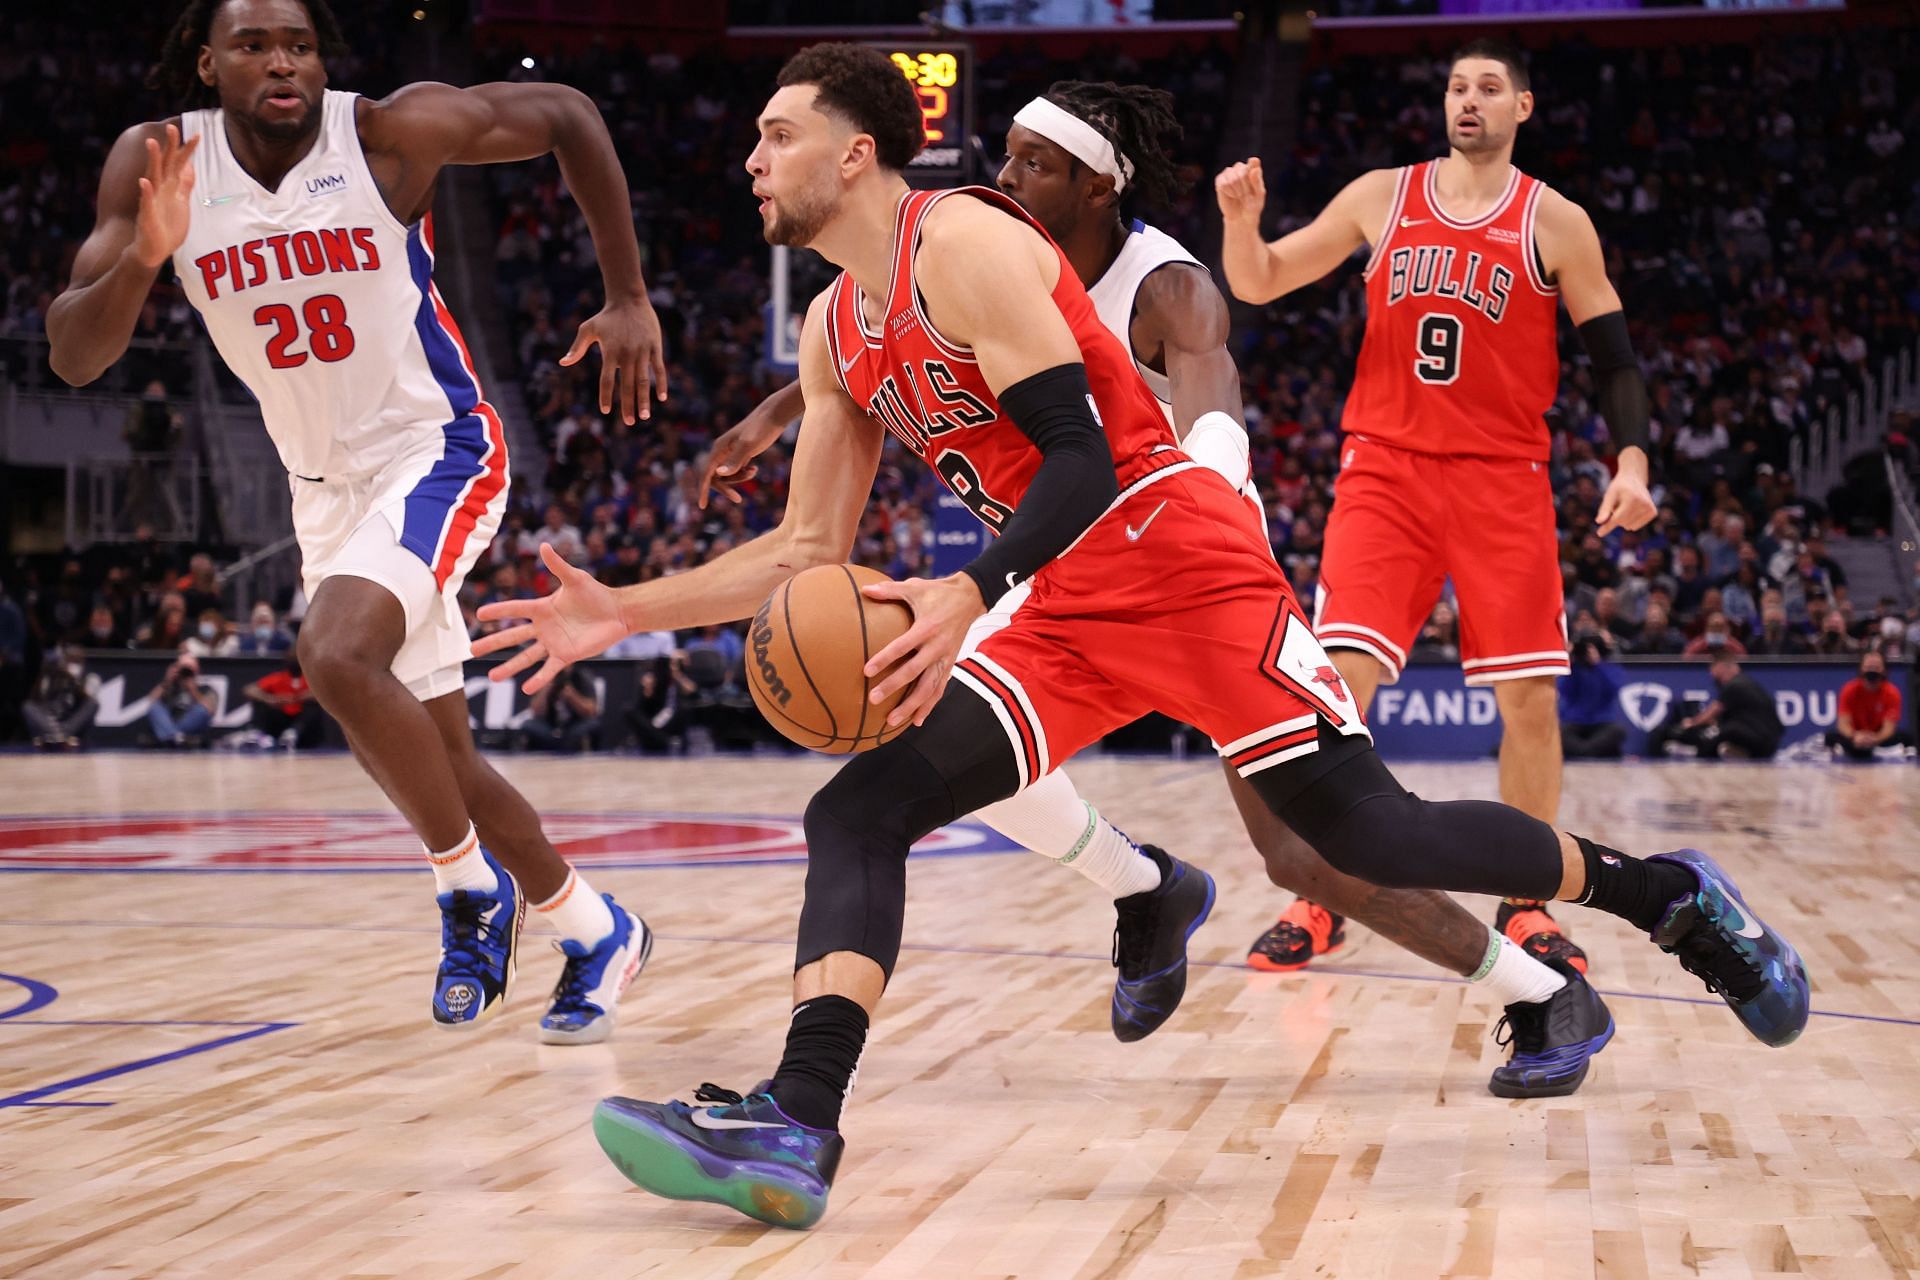 Chicago Bulls star Zach Lavine drives into the paint against the Detroit Pistons